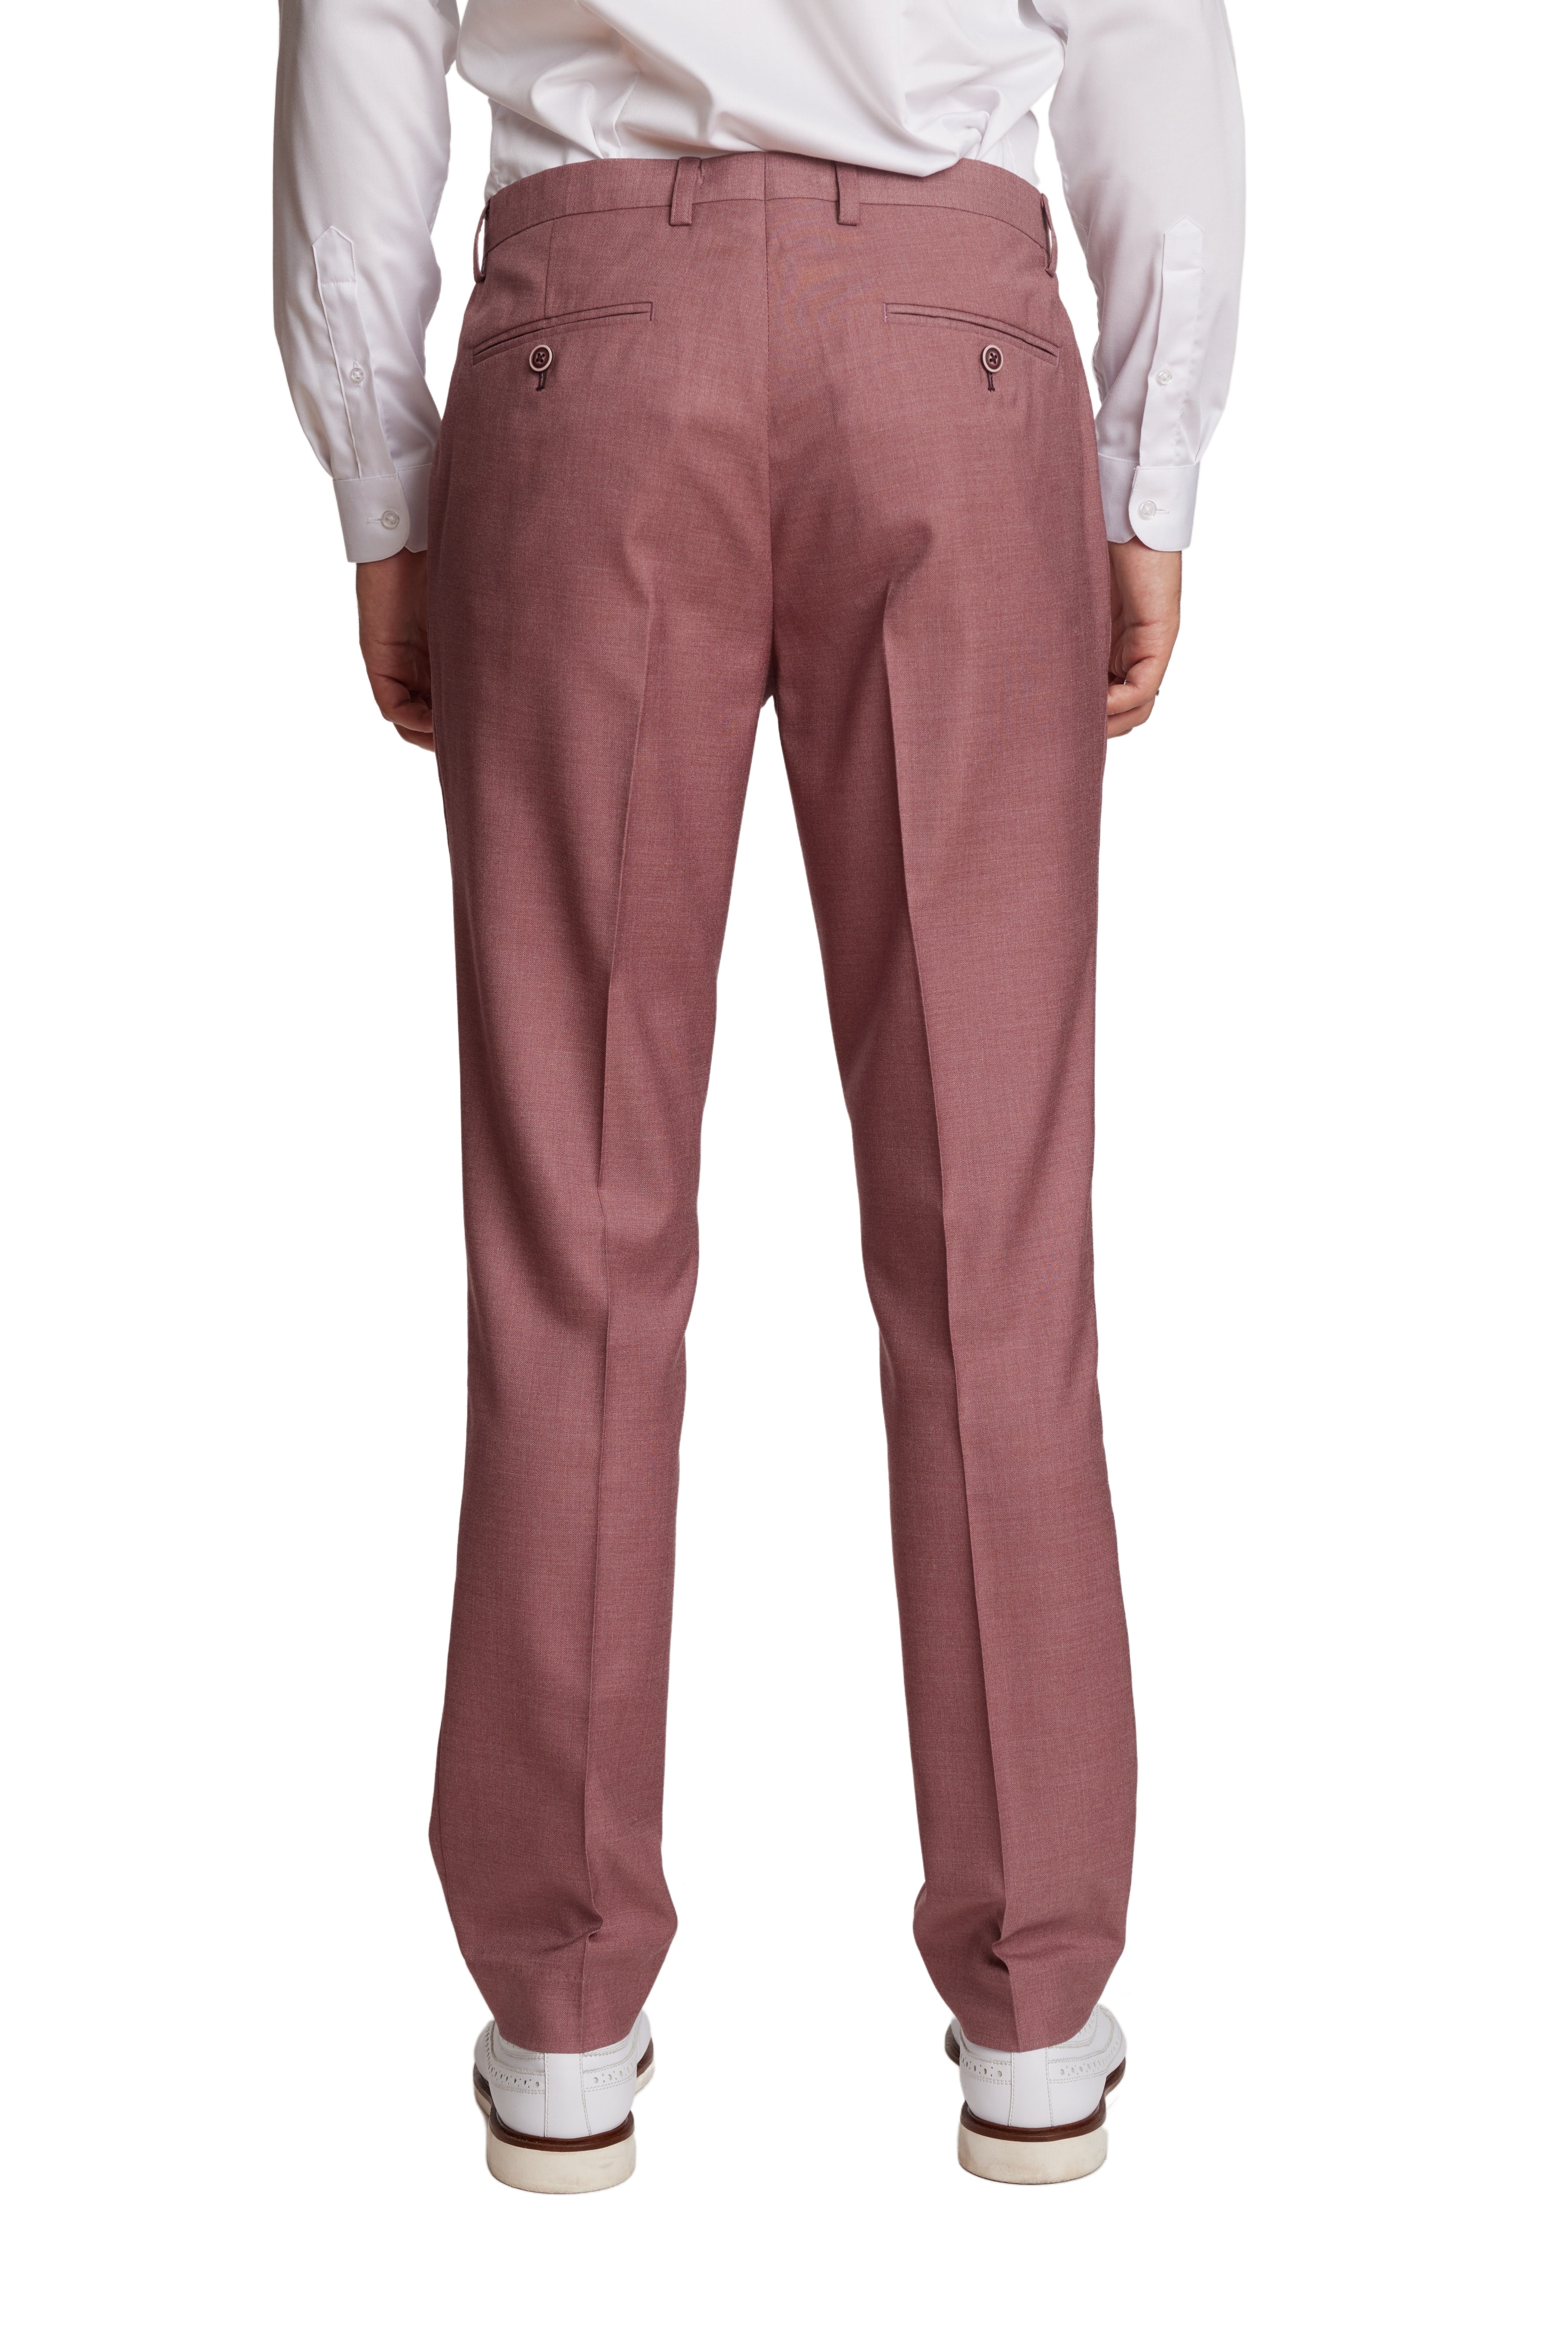 Downing Pants - slim - Dusted Pink – Paisley & Gray